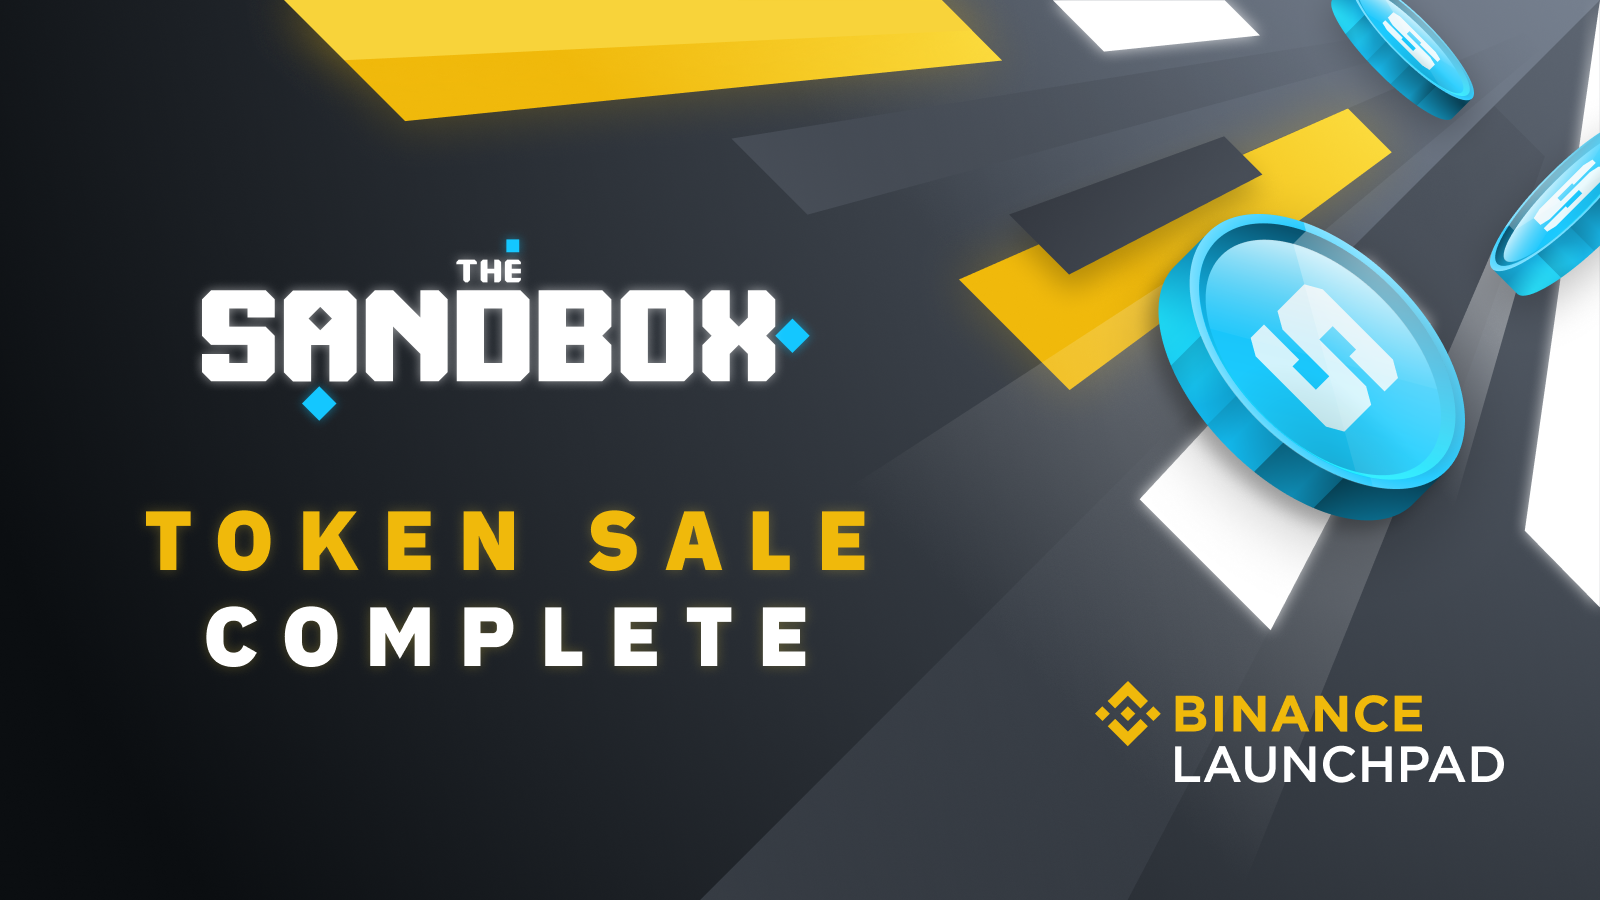 Binance Launchpad: The Sandbox Sale Results